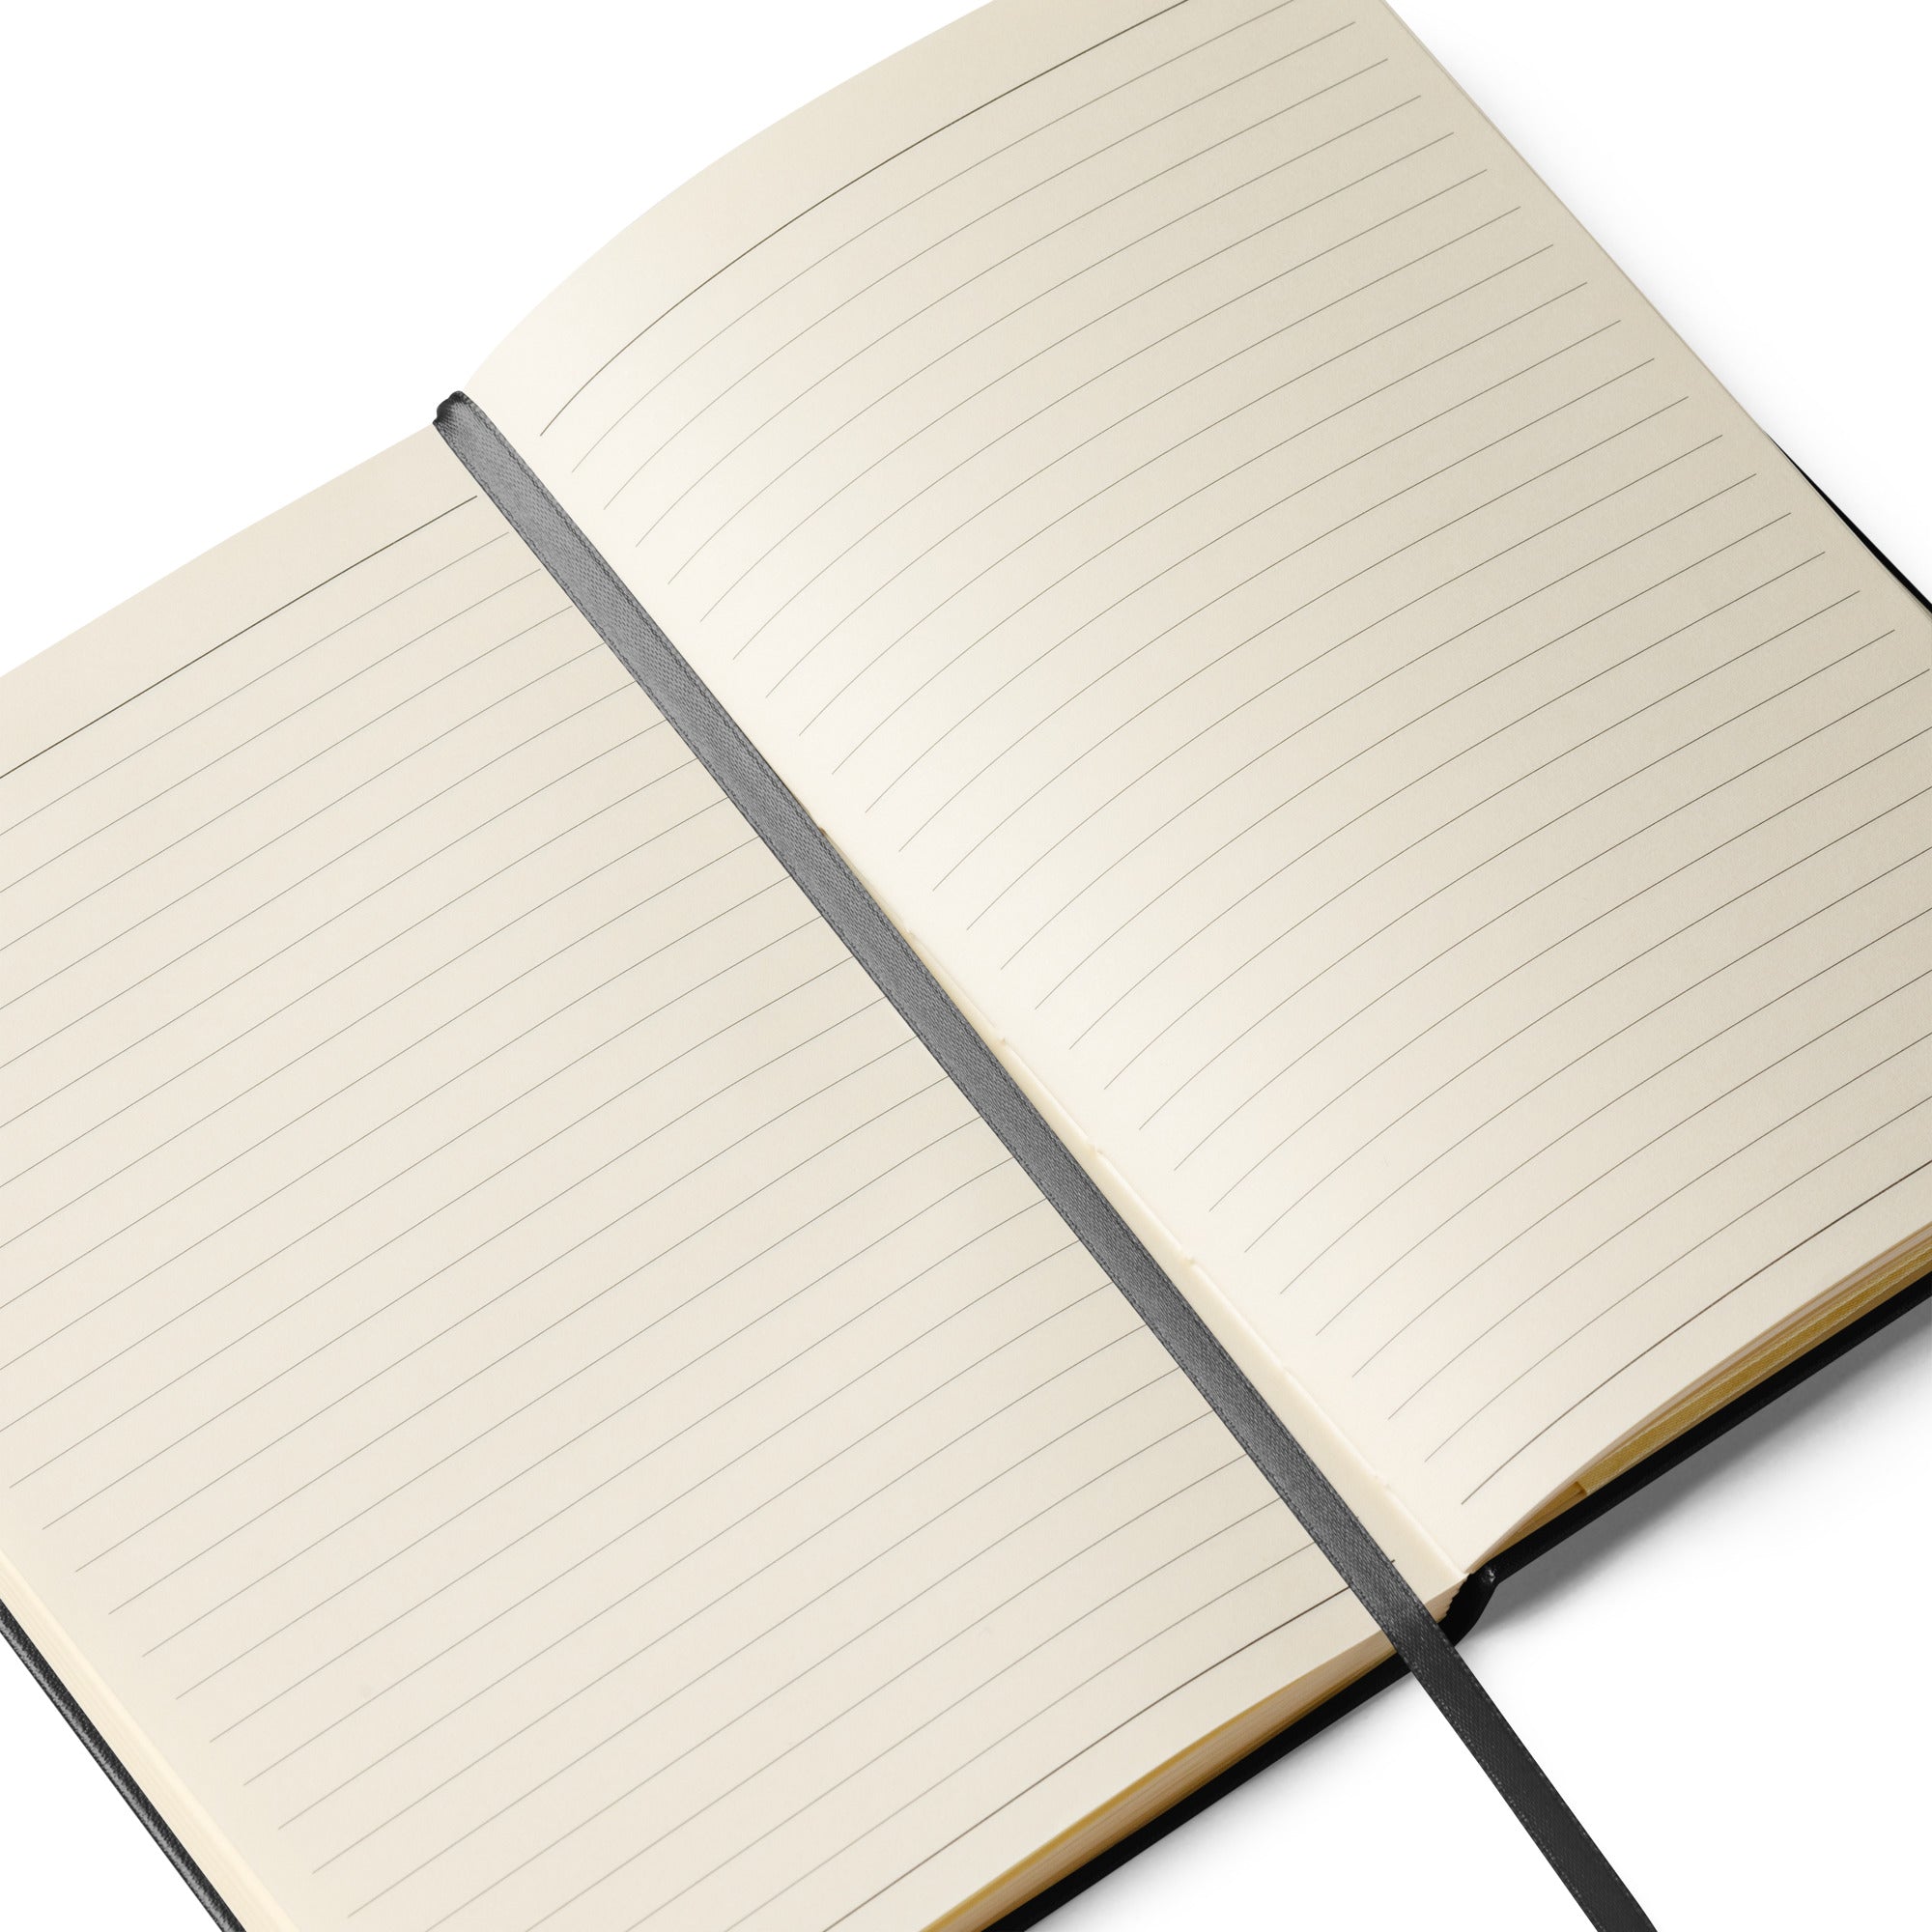 BLUEPILL | Hardcover bound notebook